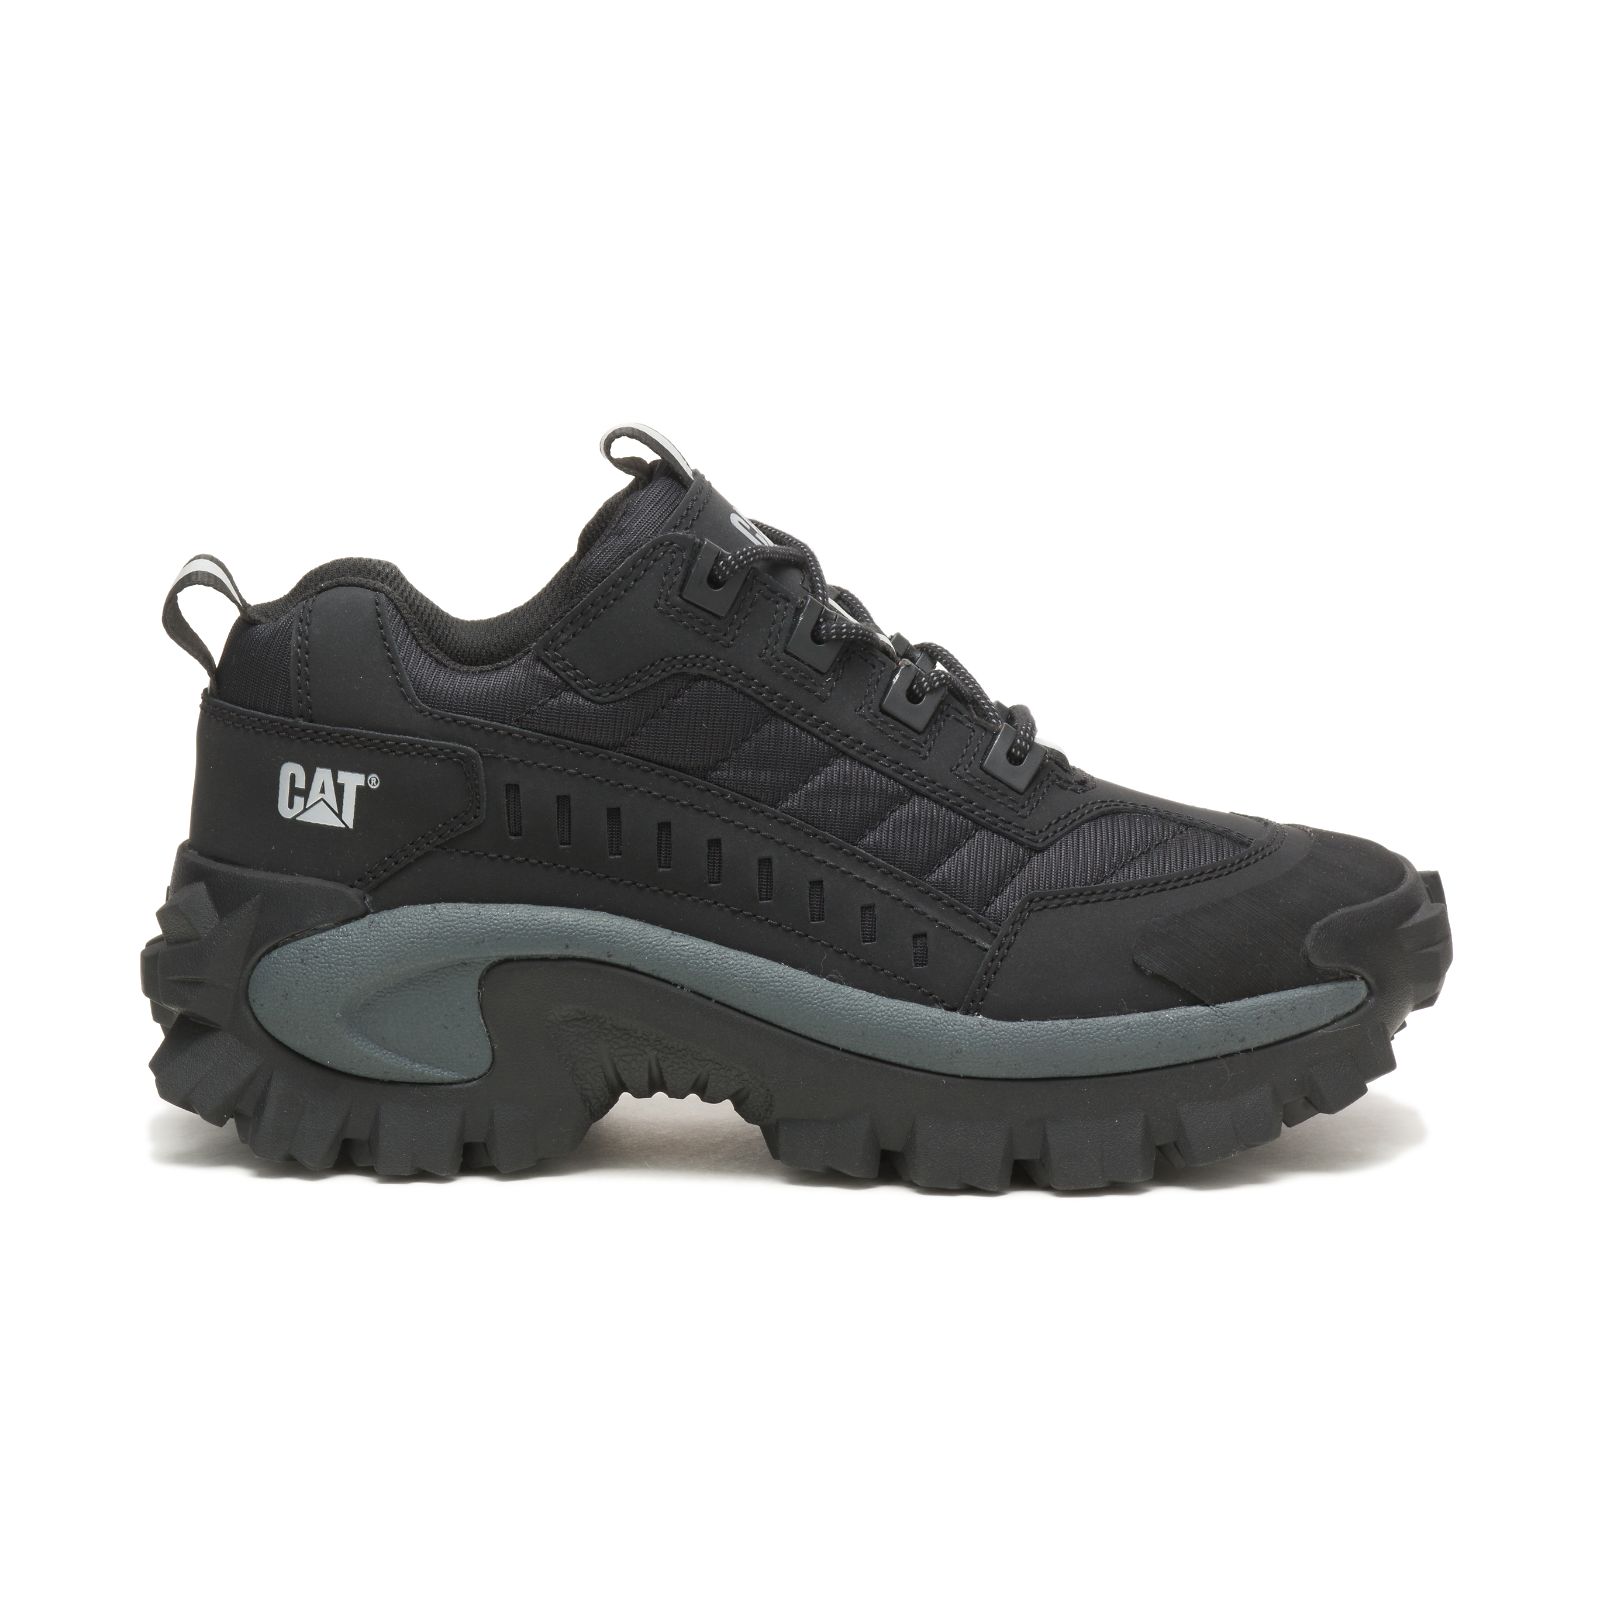 Caterpillar Casual Shoes Dubai - Caterpillar Intruder Womens - Black/Dark Grey XGVNOY607